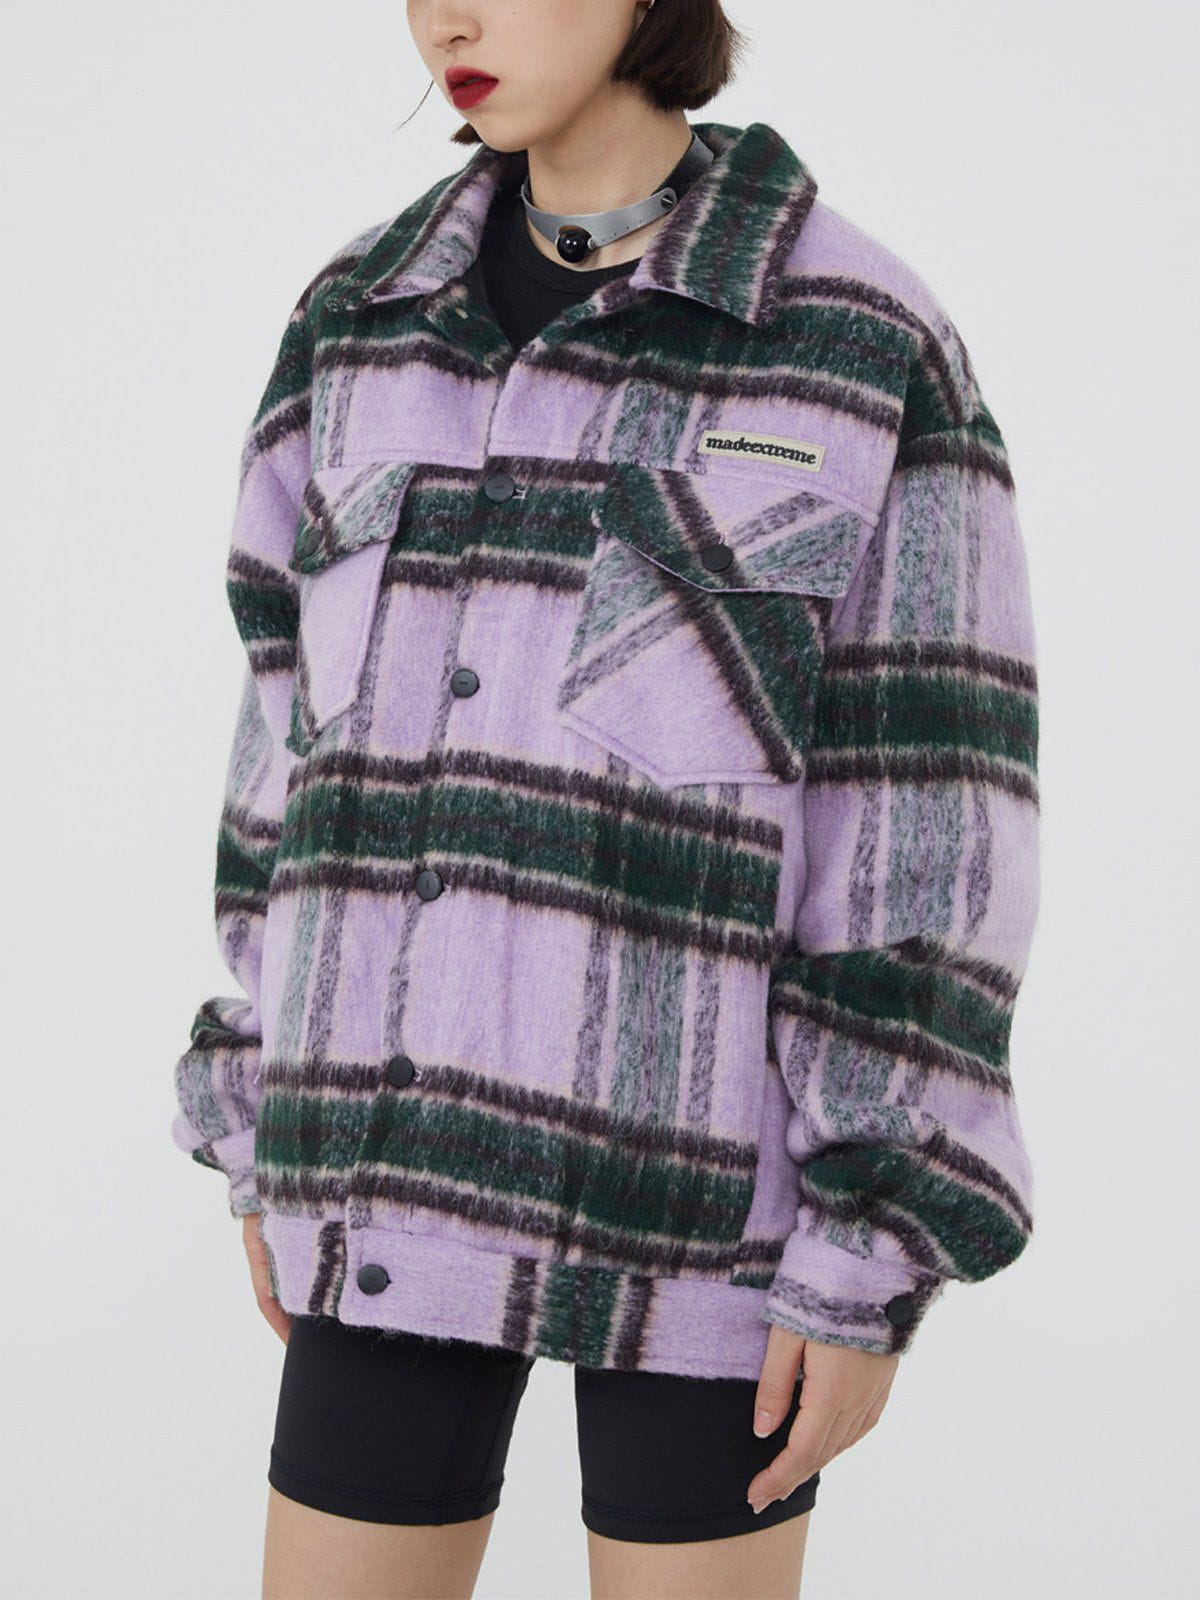 LUXENFY™ - Plaid Stripe Winter Coat luxenfy.com